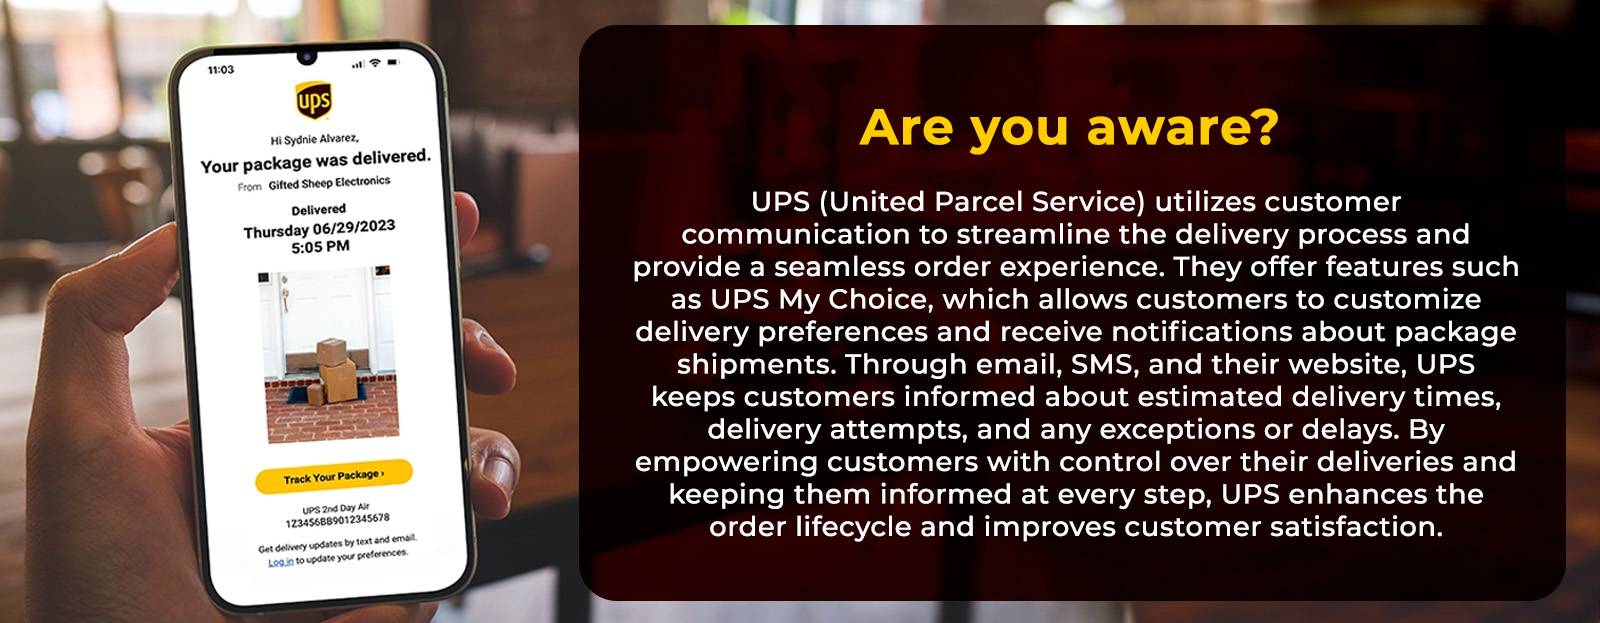 UPS improves customer experience